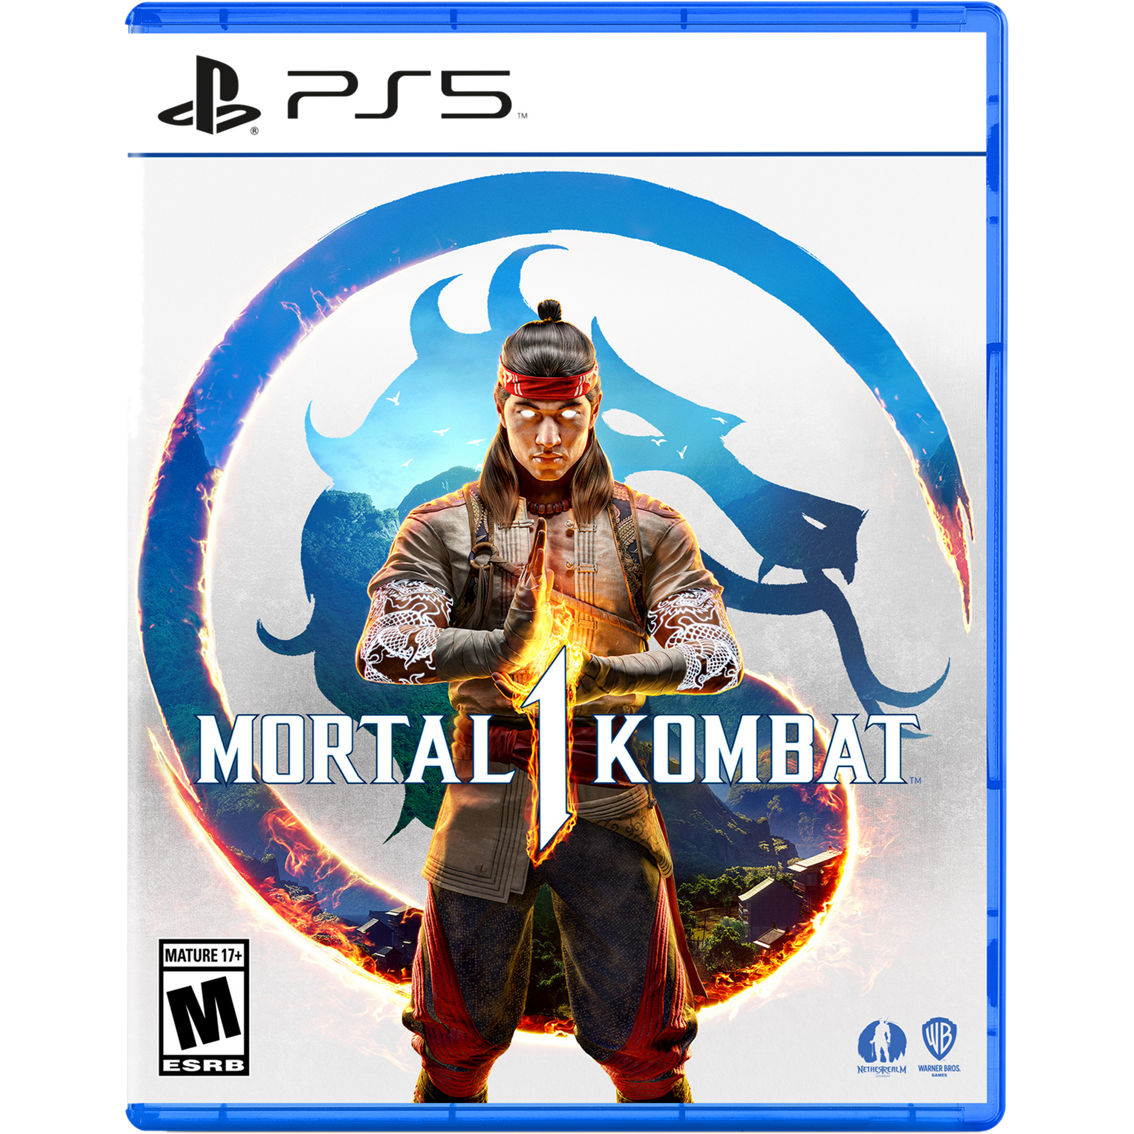 Mortal Kombat 1 (PS5) - Image 1 of 5